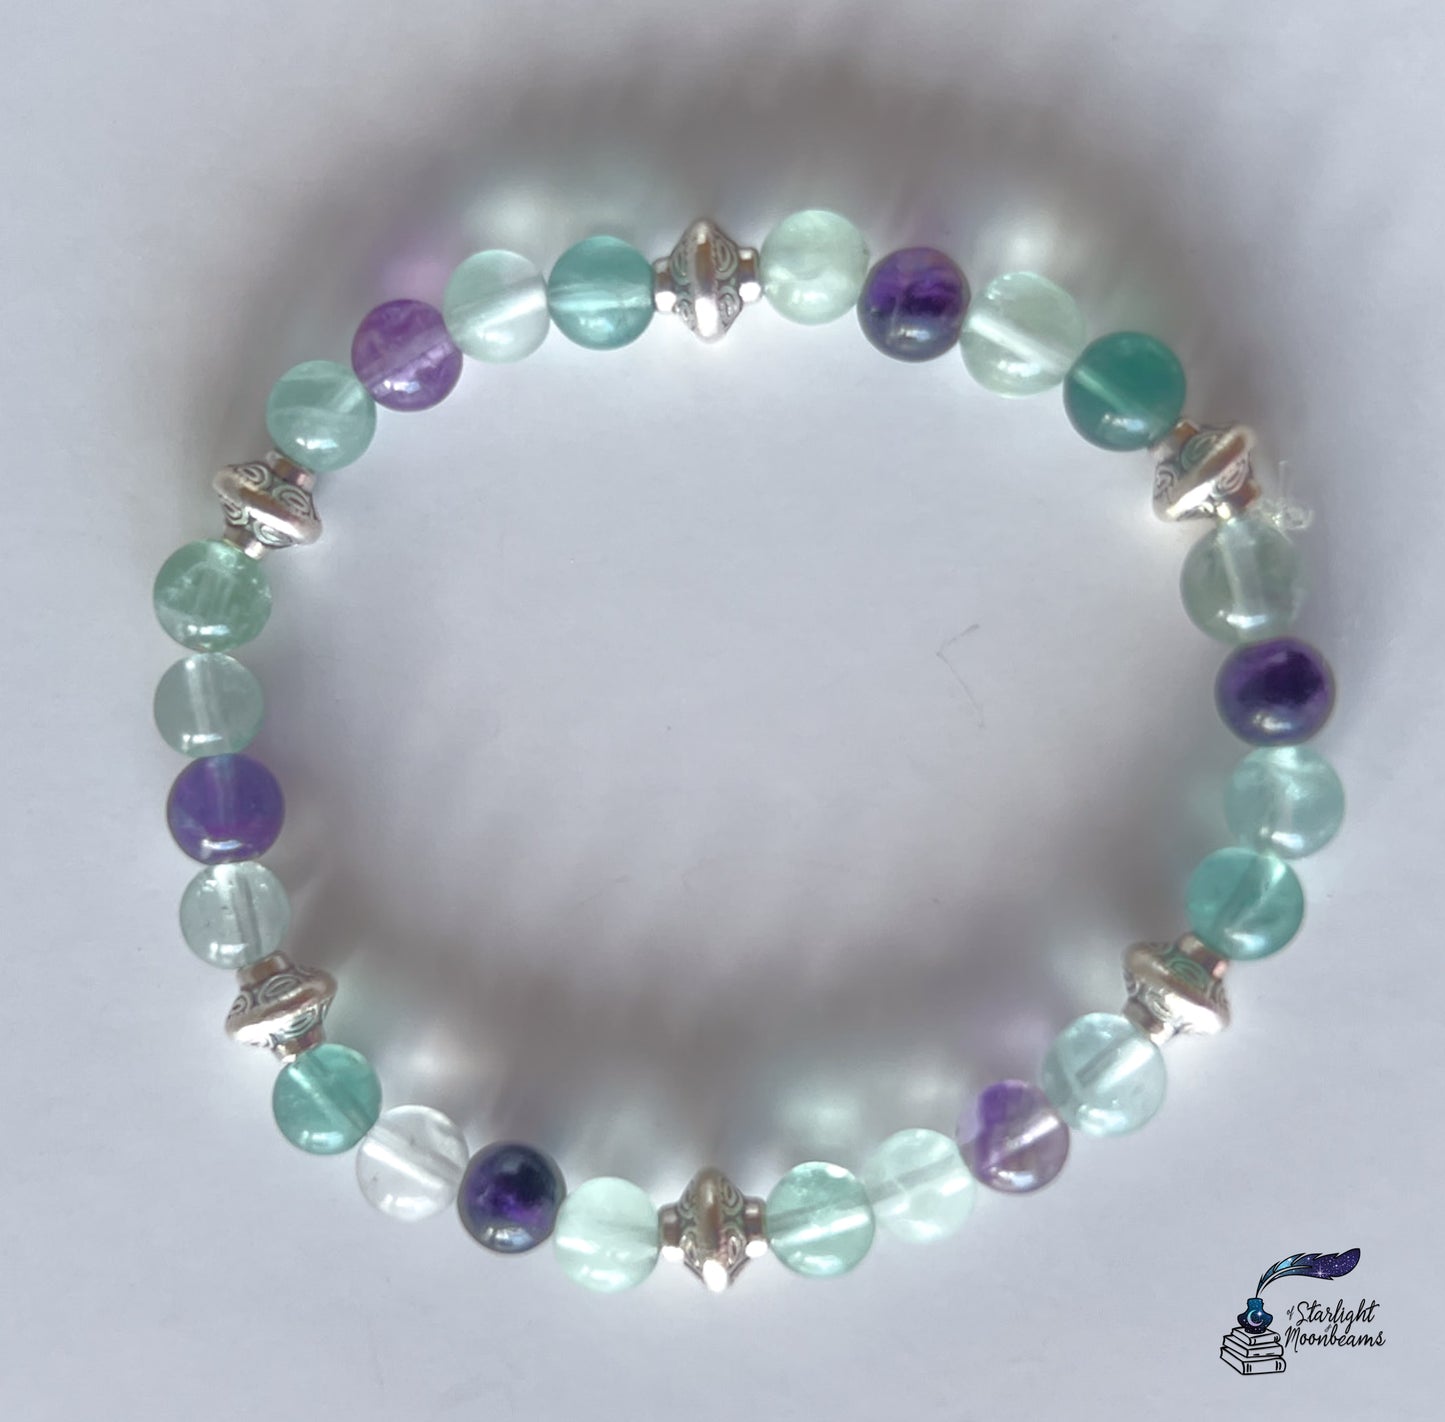 Rainbow Fluorite Bracelet for Mental Clarity, Optimism & Spiritual Connection